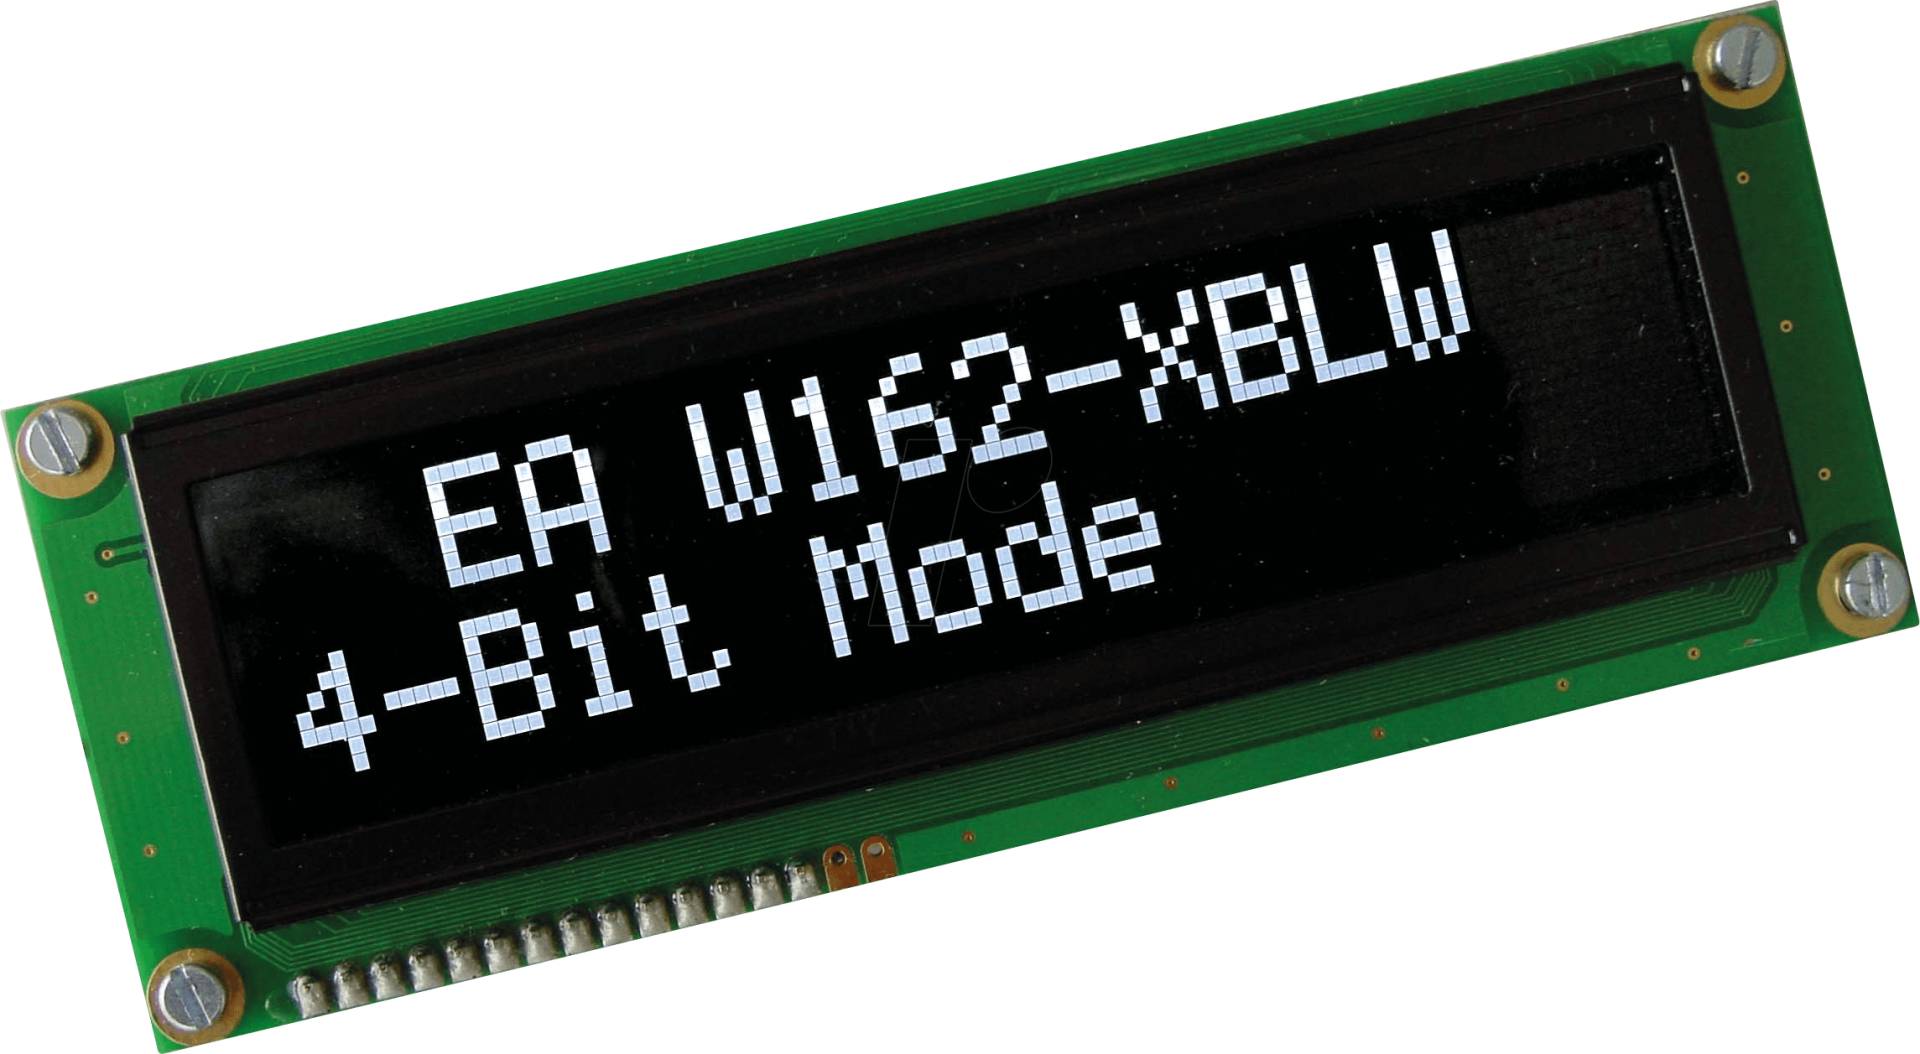 EA W162-XBLW - Display OLED, 2x16, 122x44mm, weiss von DISPLAY VISIONS